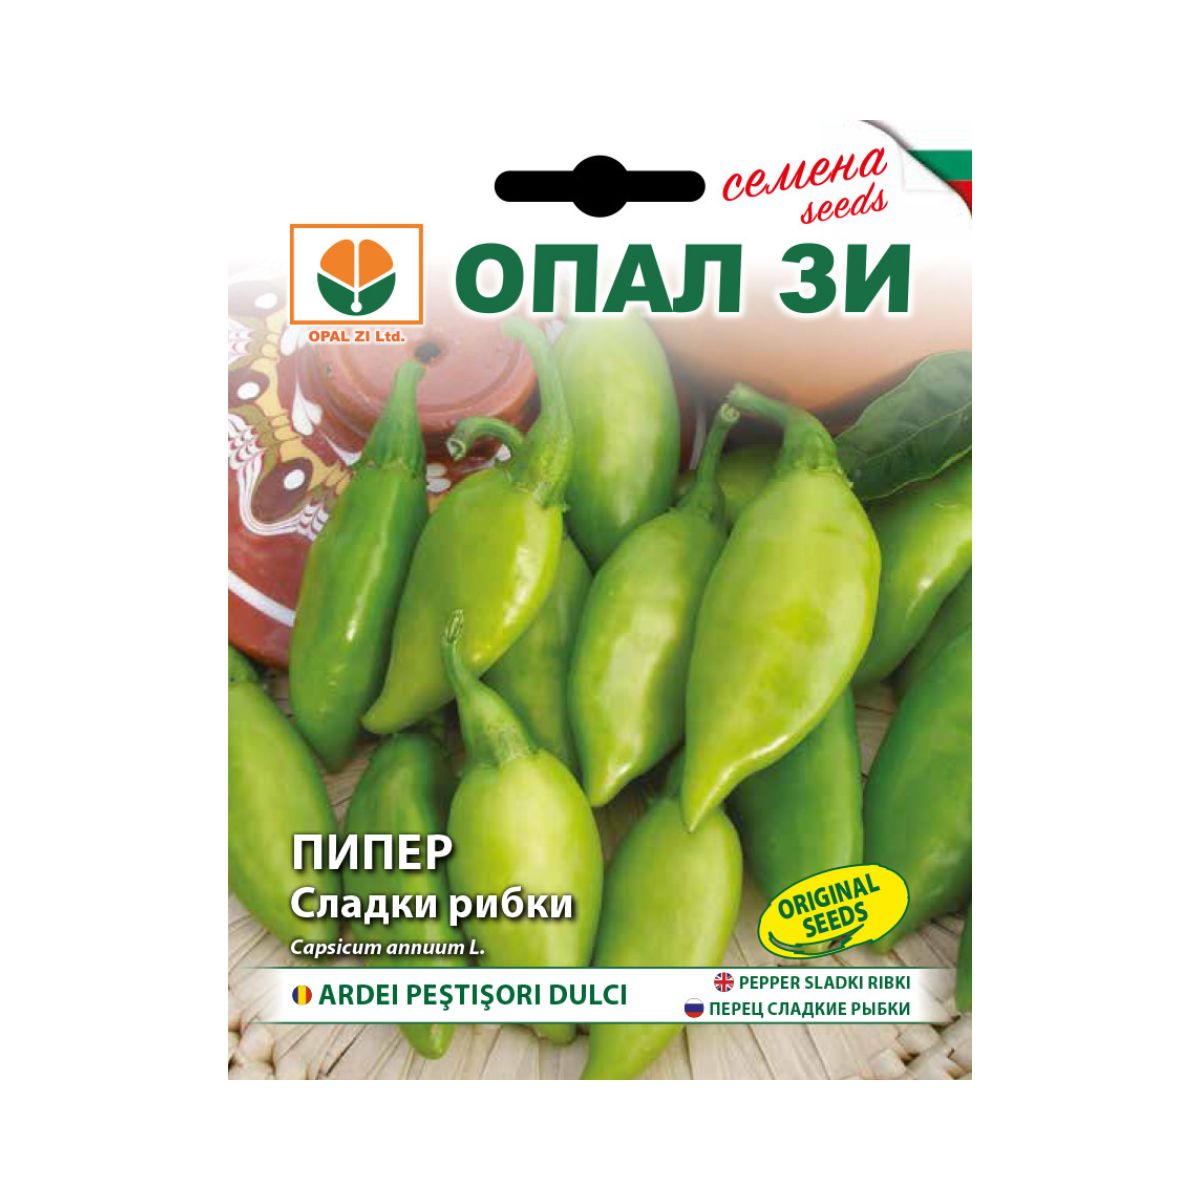 Ardei - Seminte ardei Pestisori dulci- 2 grame OPAL, hectarul.ro